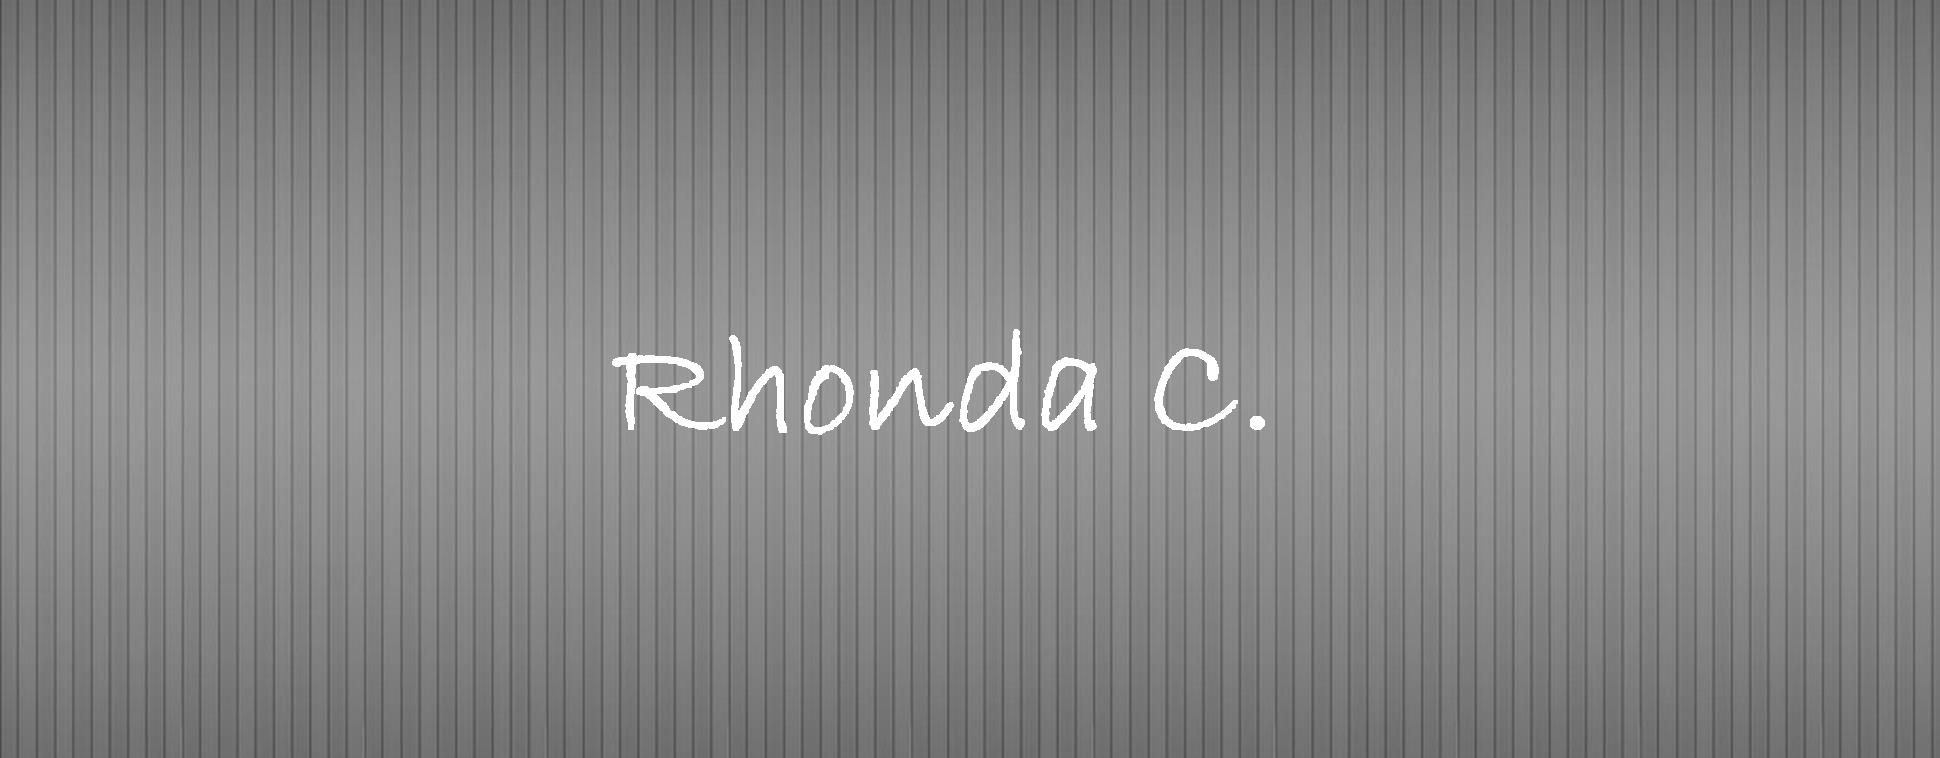 Rhonda Crosson.jpg